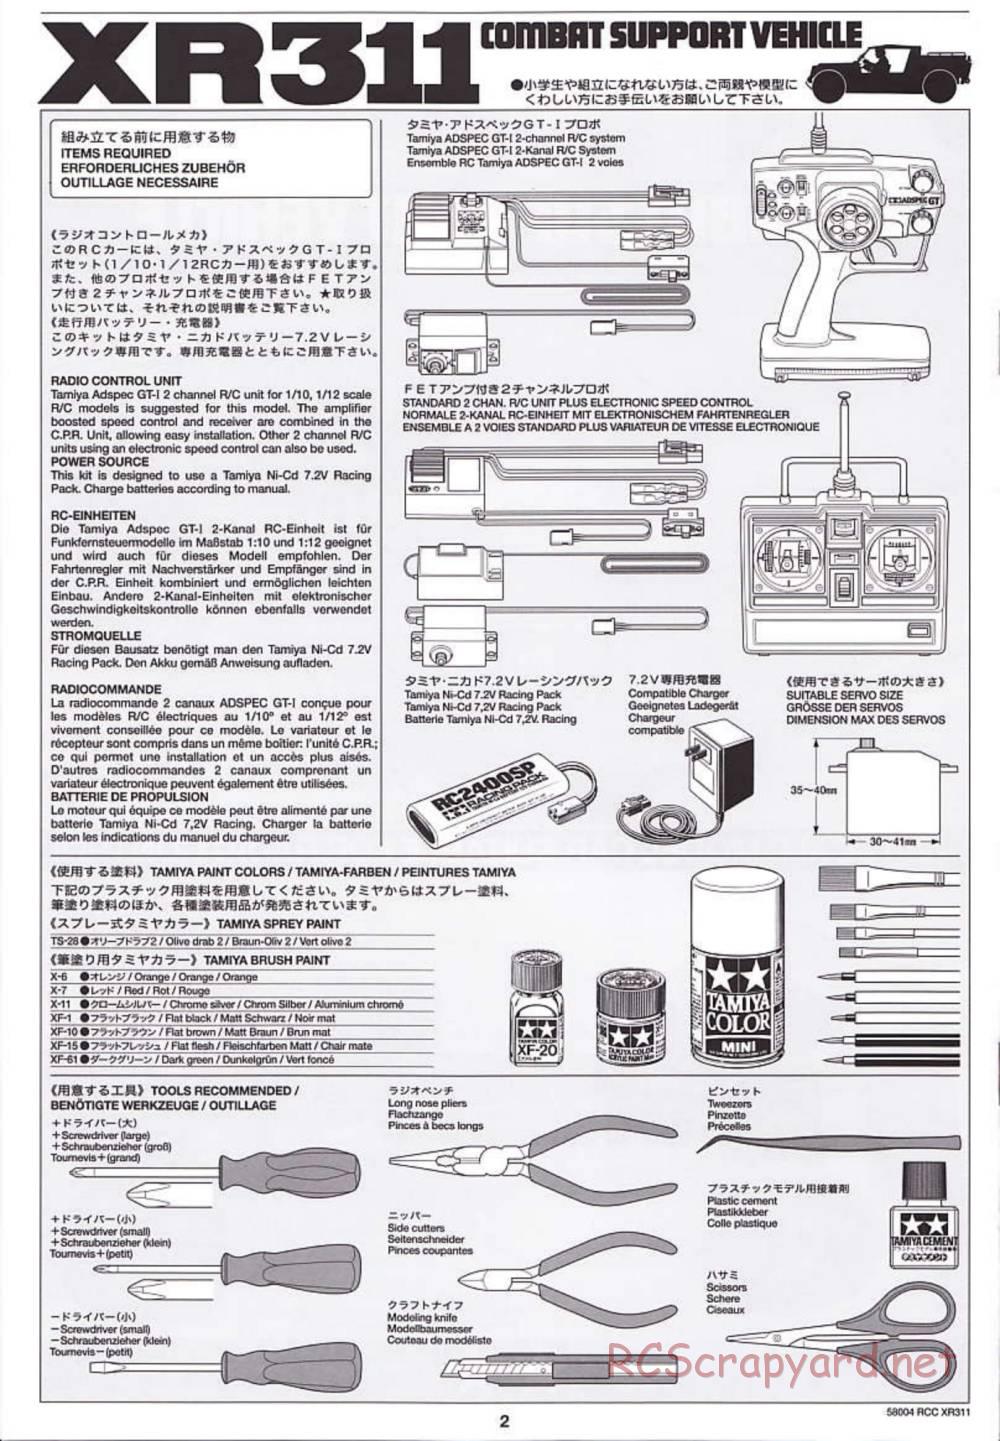 Tamiya - XR311 Combat Support Vehicle (2000) - 58004 - Manual - Page 3